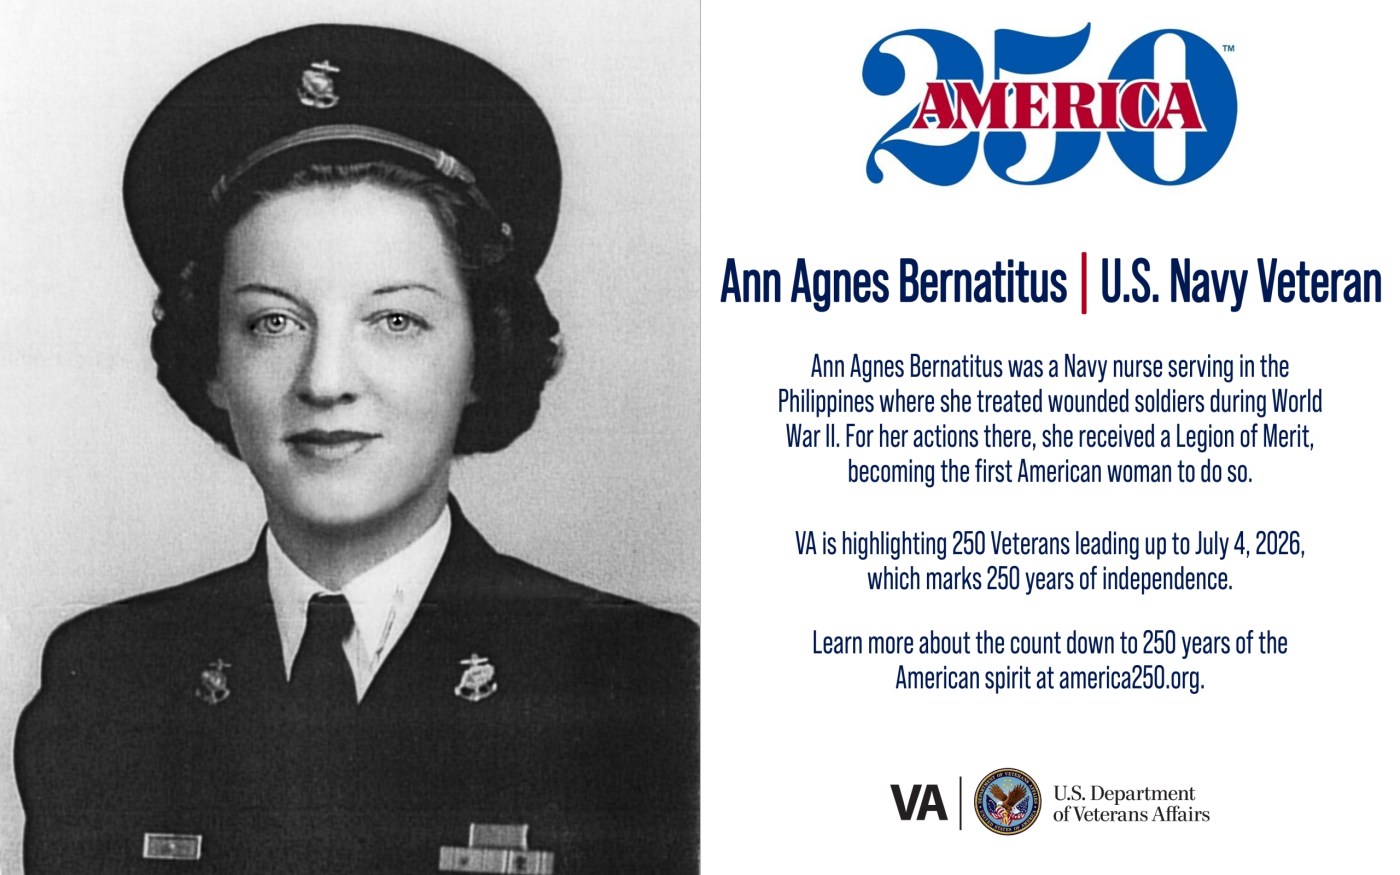 America250: Navy Veteran Ann Agnes Bernatitus